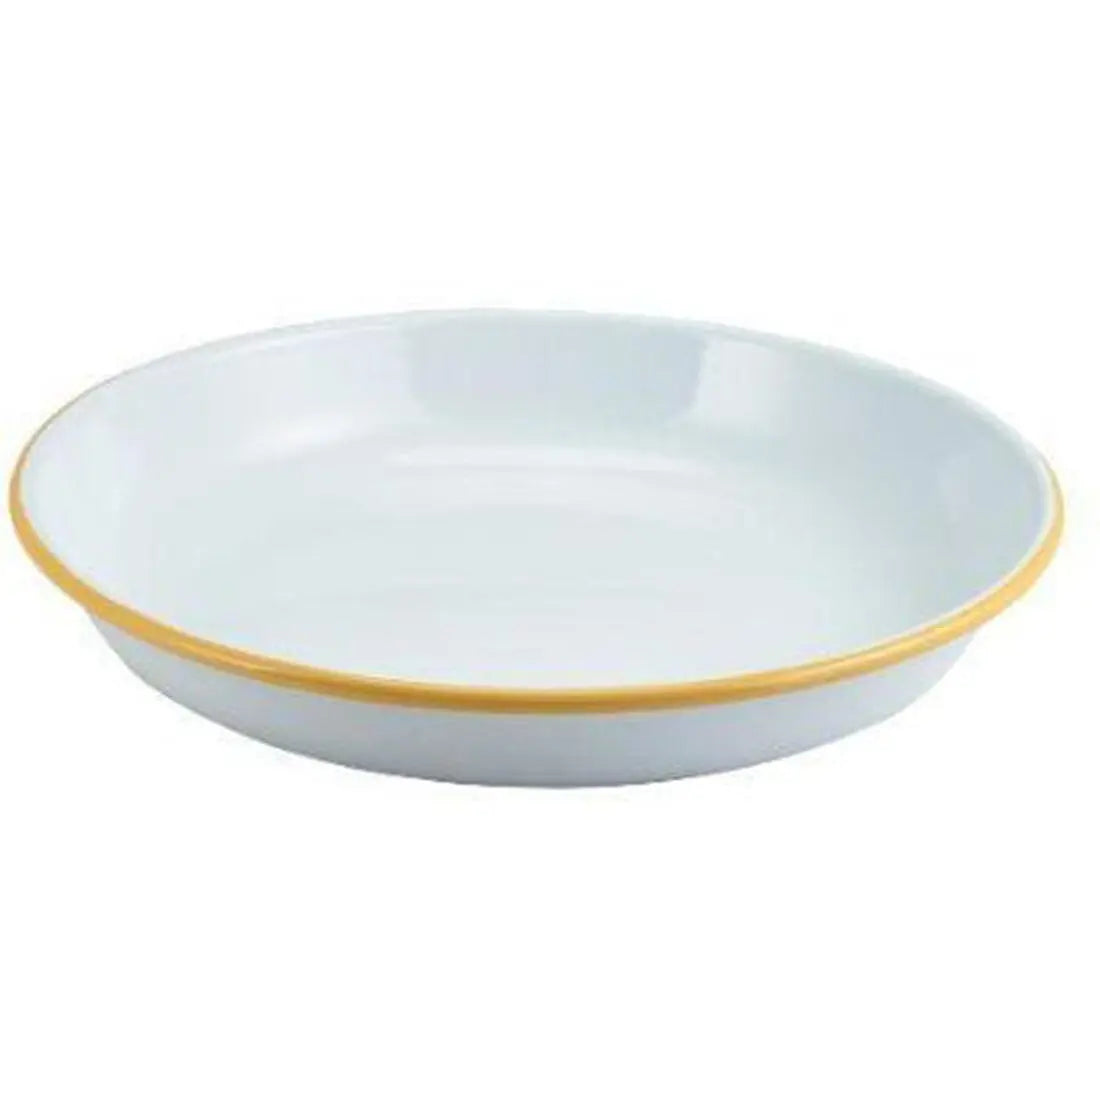 Personalised Enamel Snack Bowl Enamel - White with Yellow Rim  